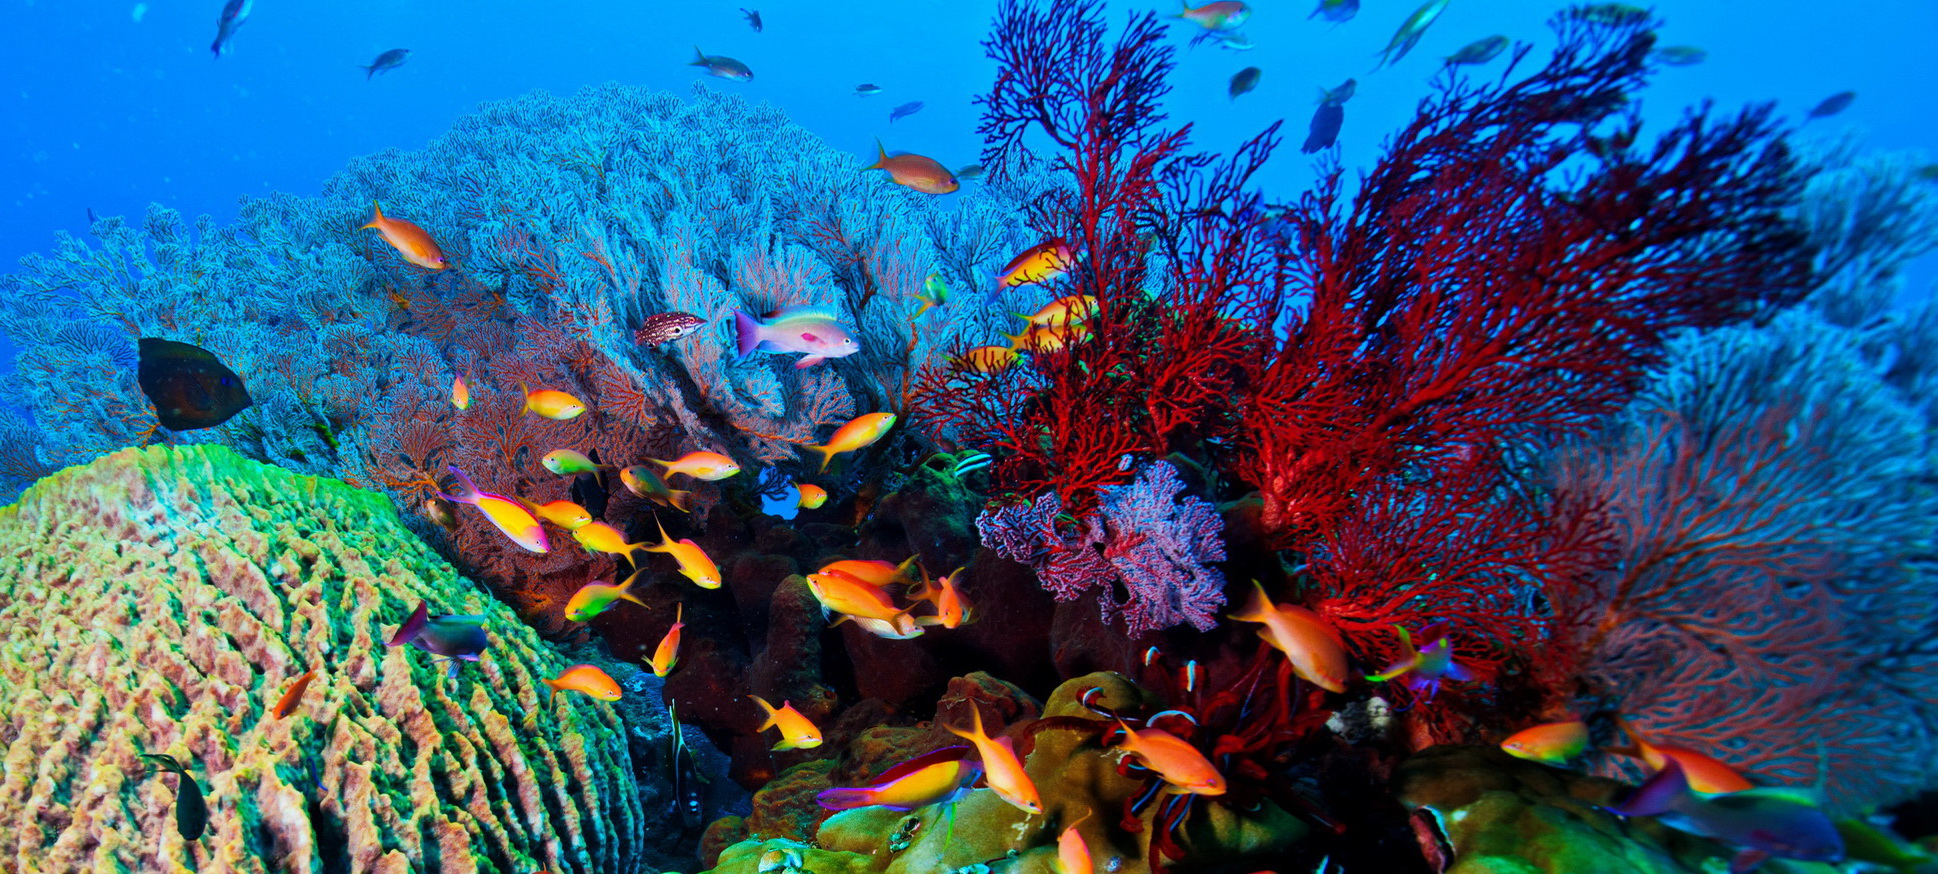 Scuba Diving & Snorkeling - Amed Dive Center Bali - Amed Dive Center ...